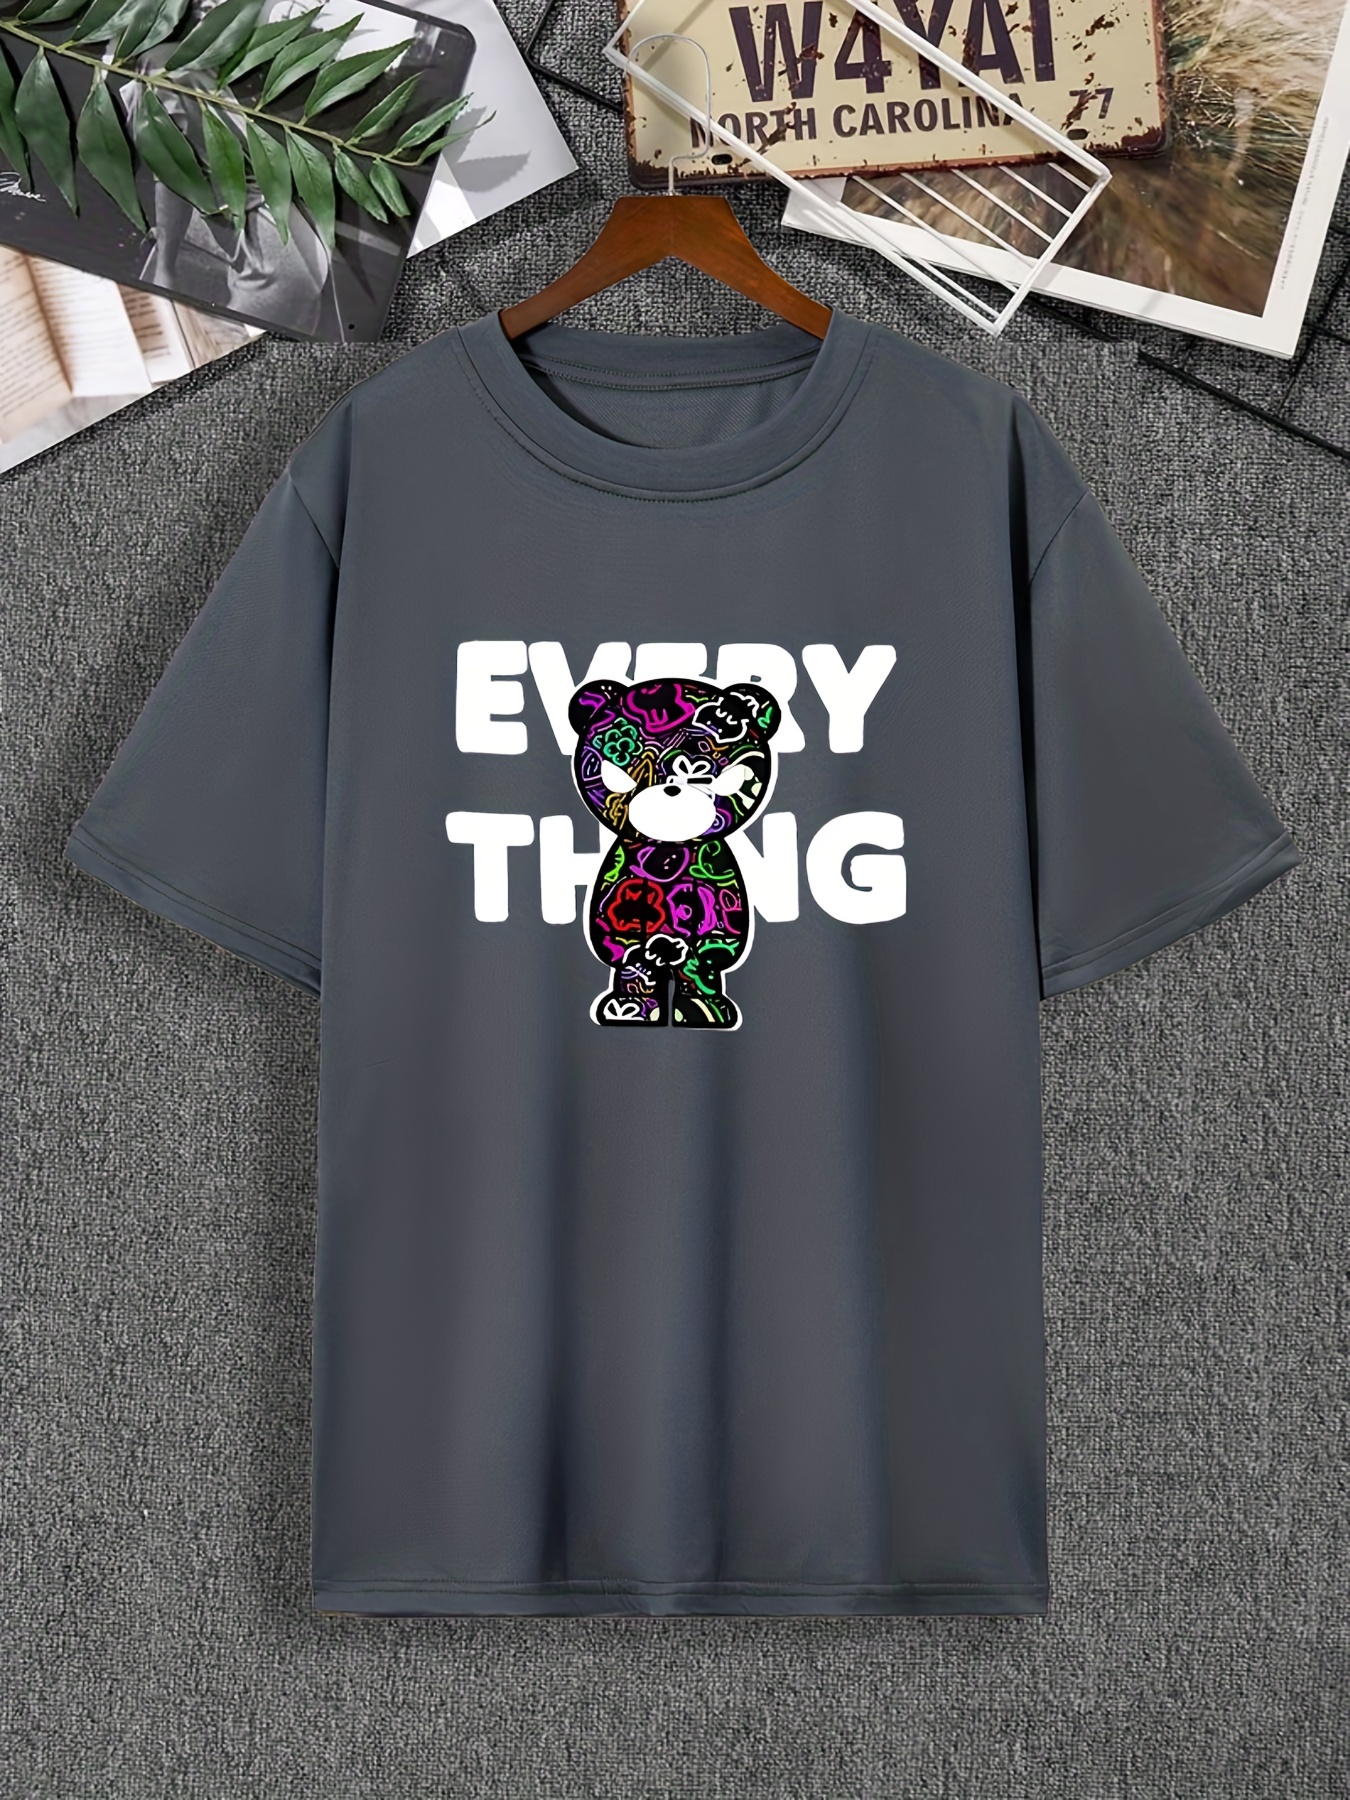 Angry Bear T Shirt 